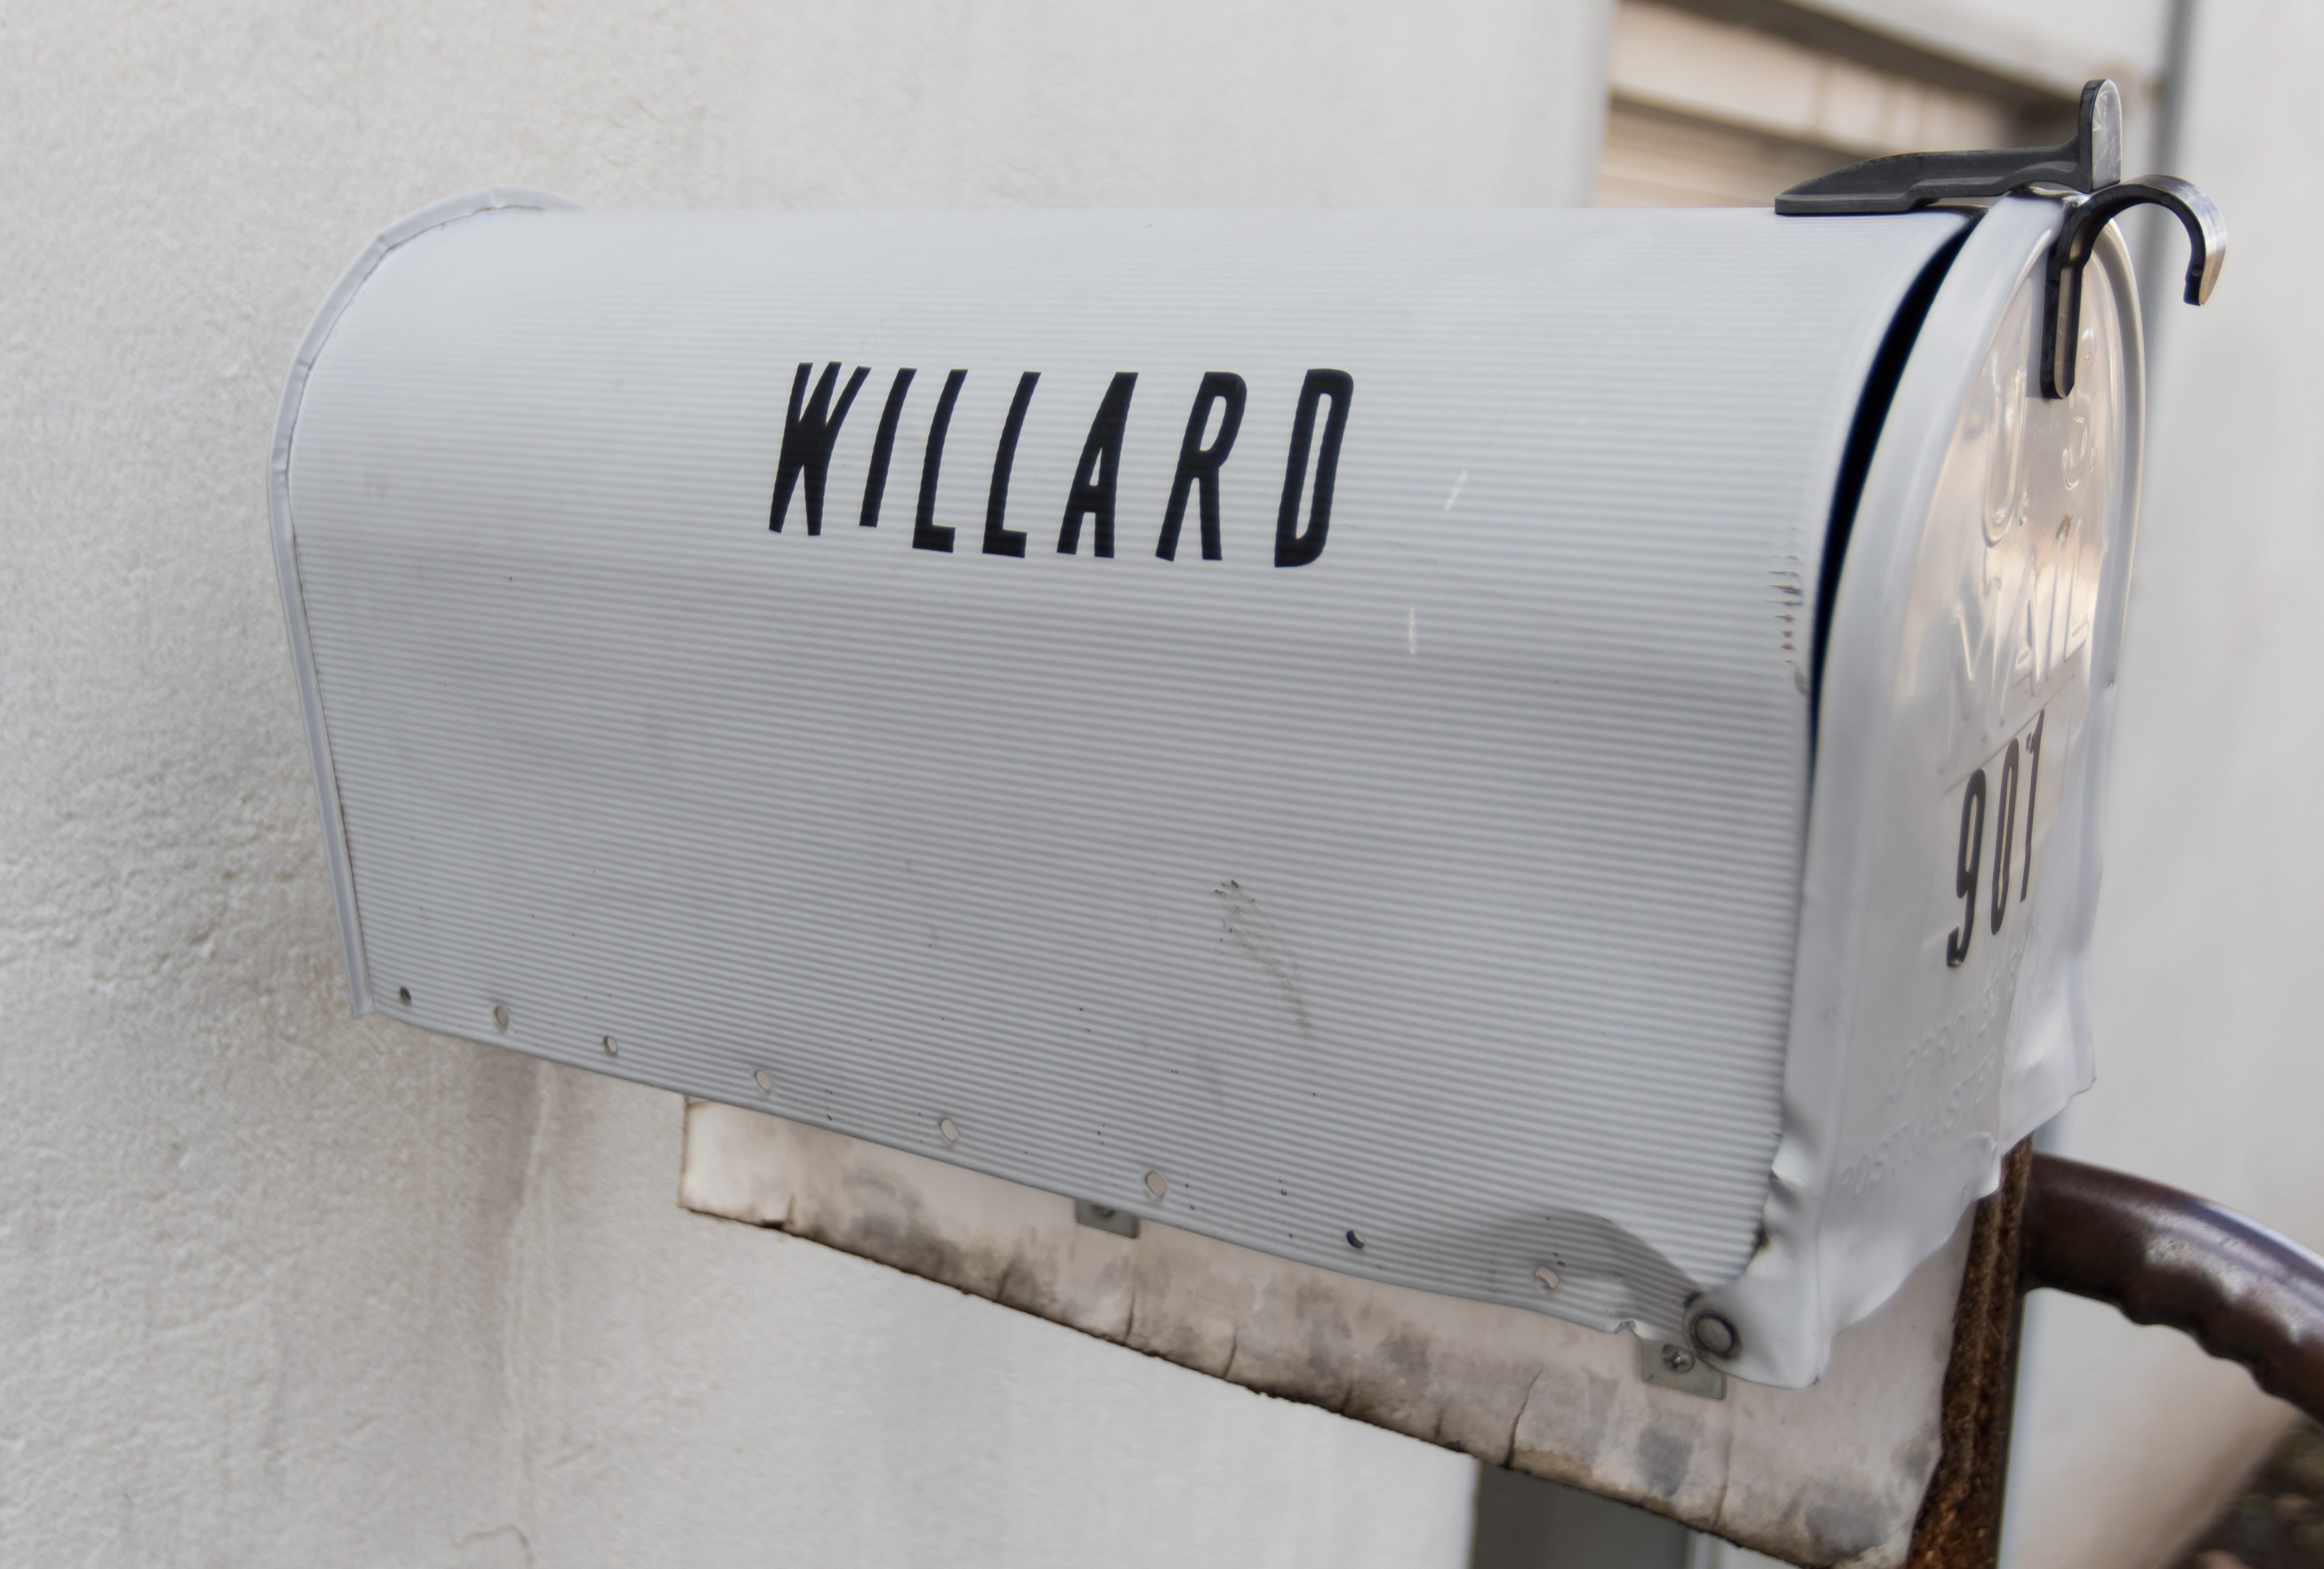 Willard's mailbox